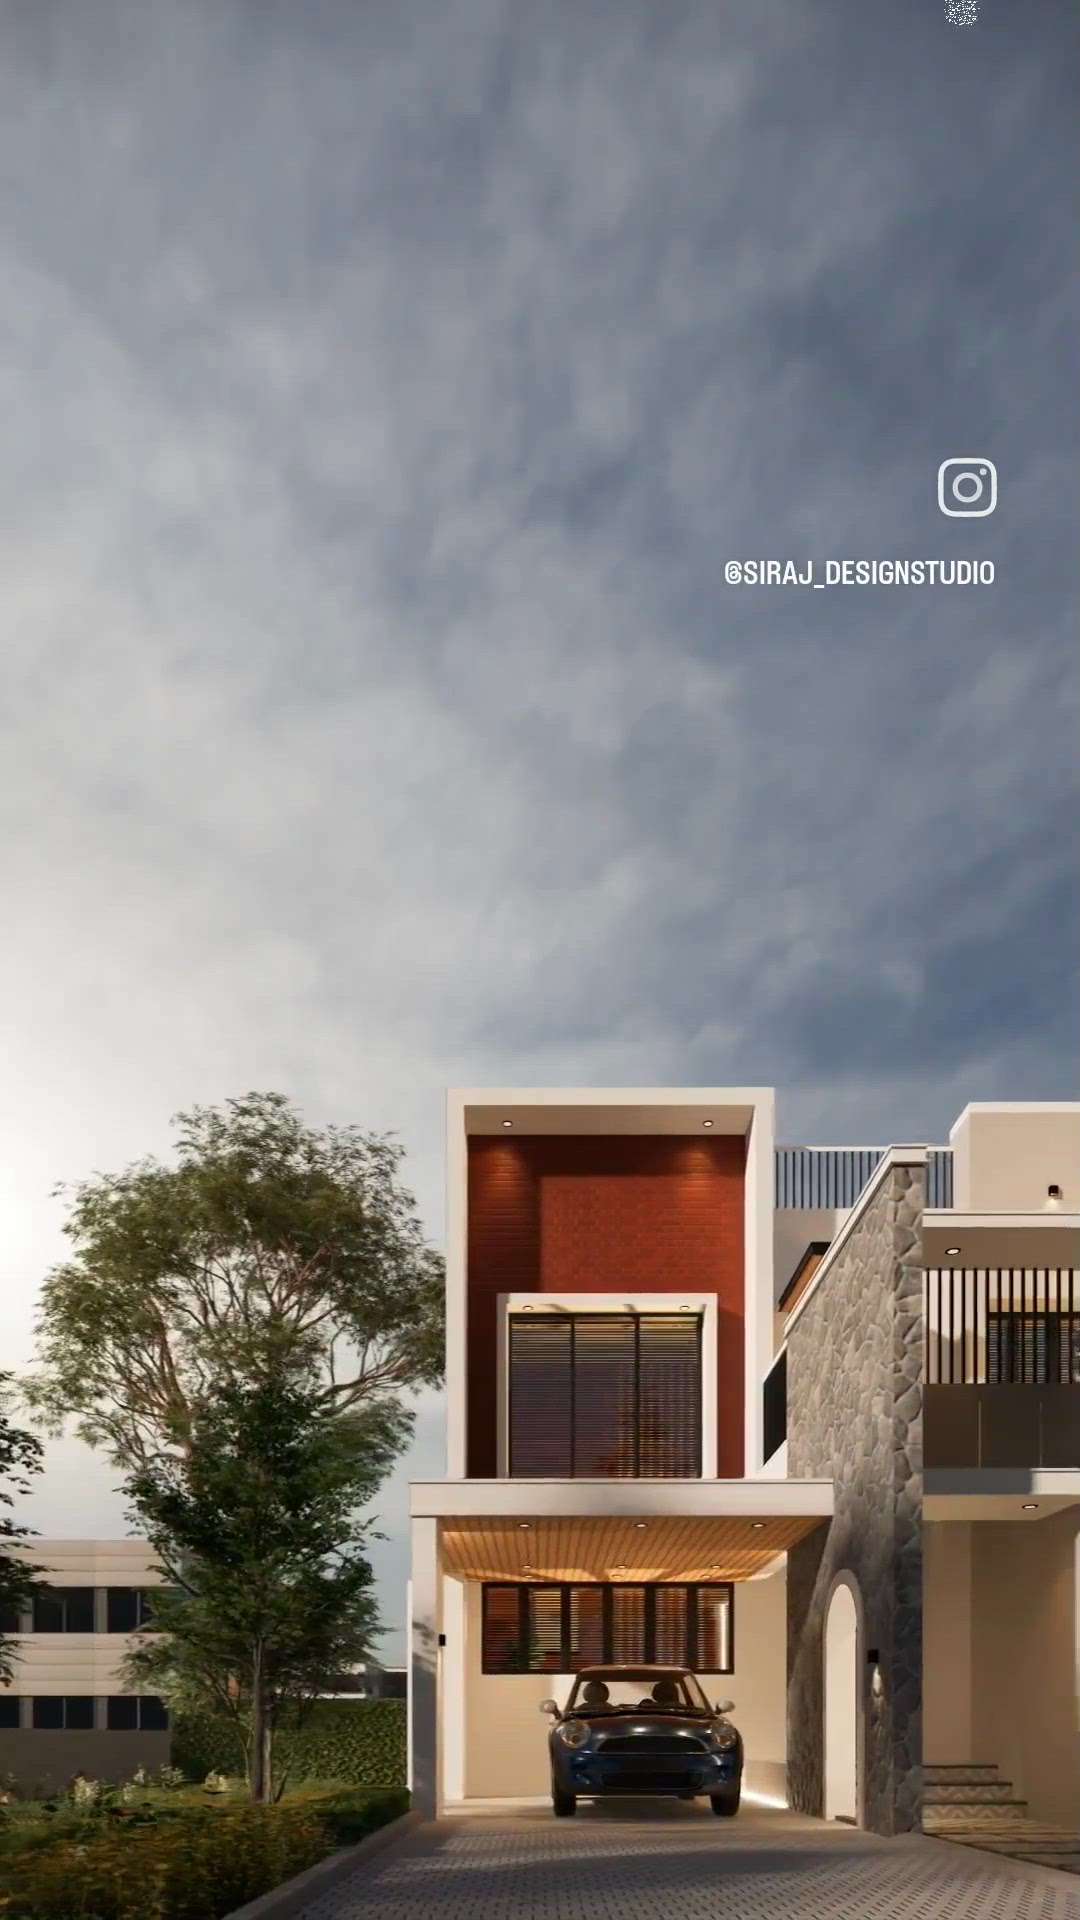 2000 sq.ft Home exterior design
3BHK.
 
 #Architect #exteriordesigns #KeralaStyleHouse #budgethome #LandscapeIdeas #sirajdesignstudio